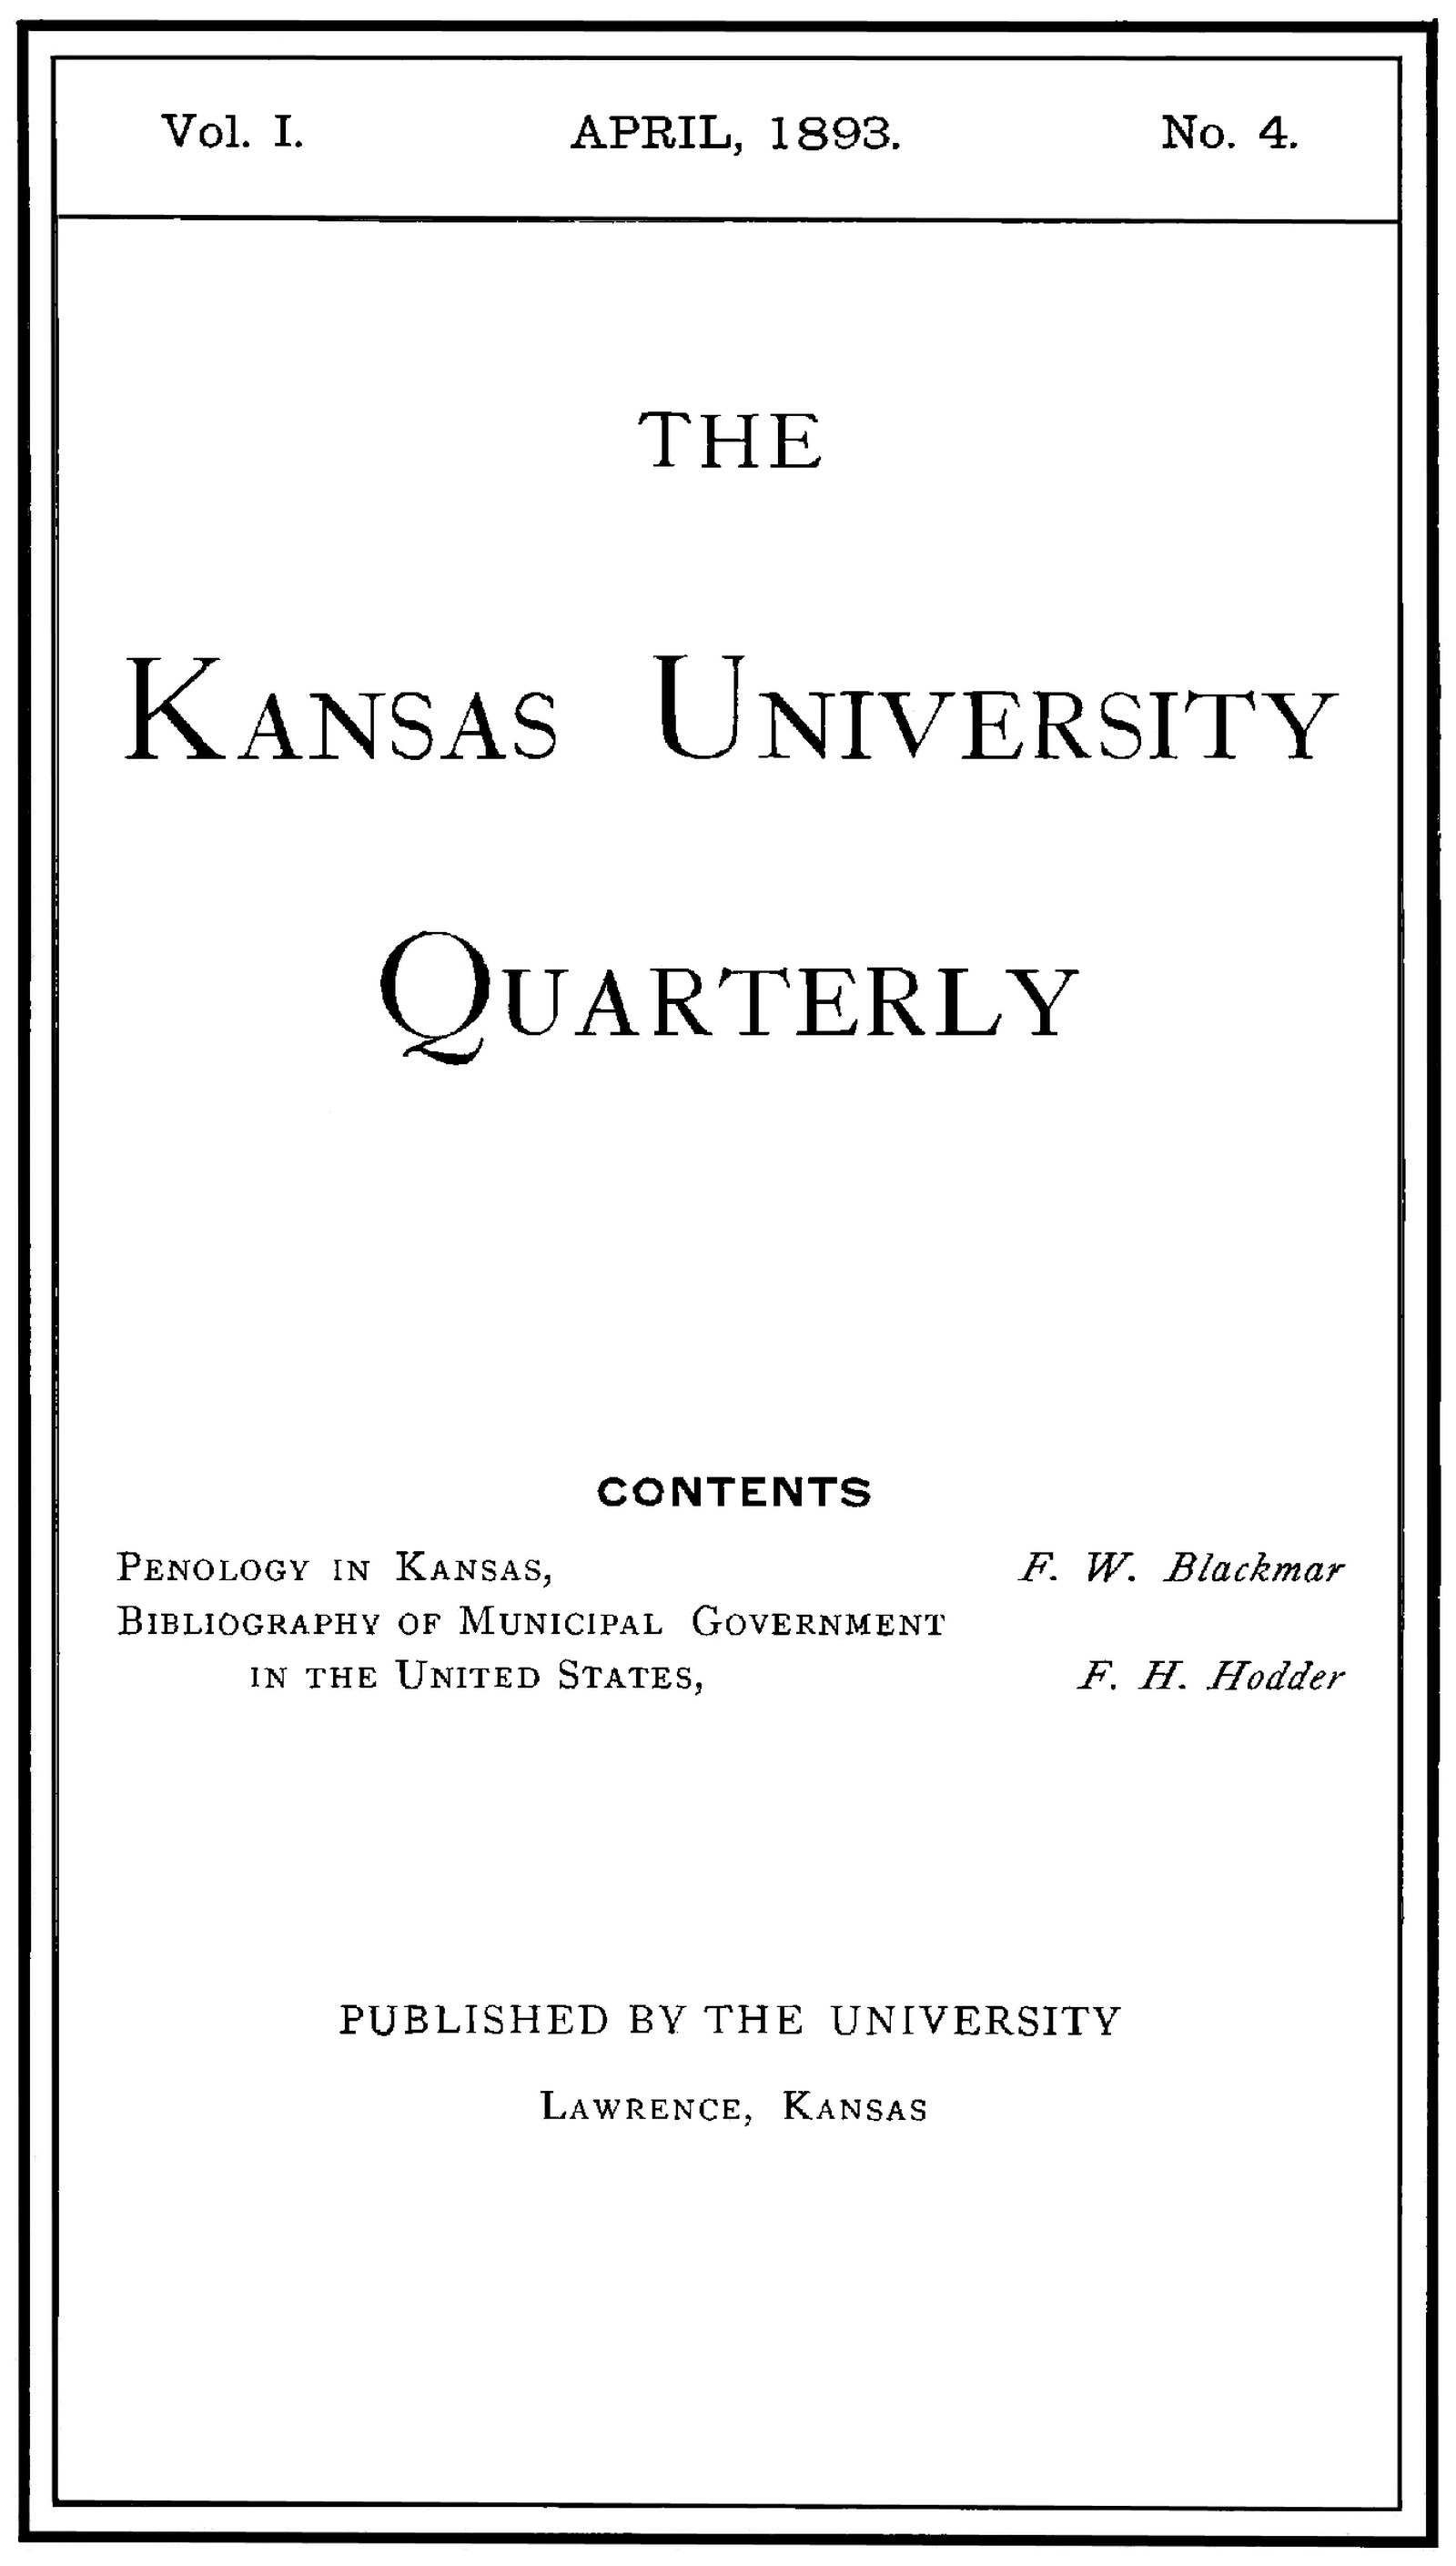 The Kansas University Quarterly